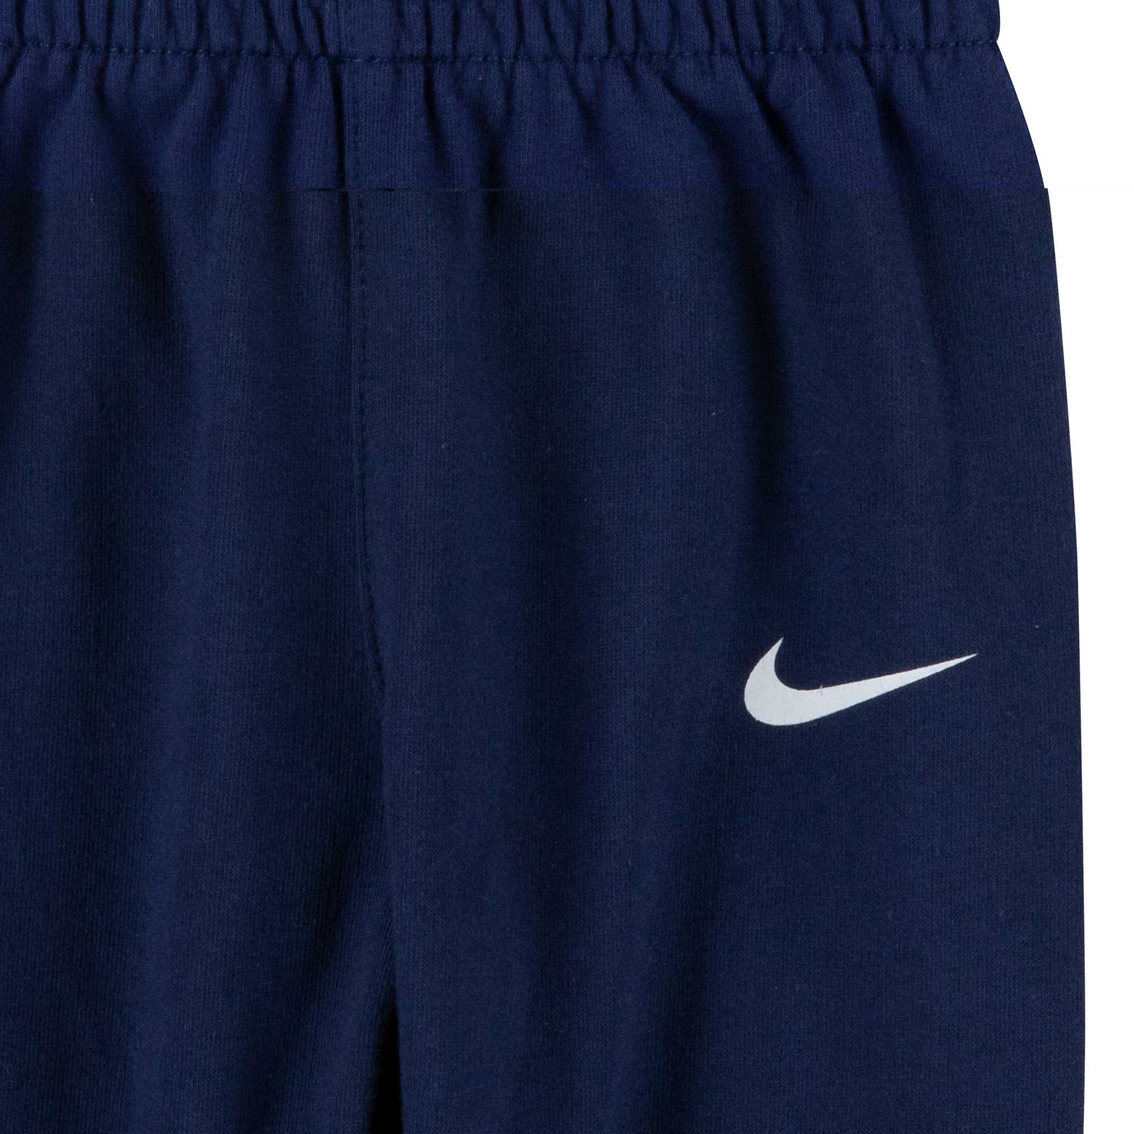 Nike Infant Boys Sportball Bodysuit and Pants 2 pc. Set - Image 5 of 5